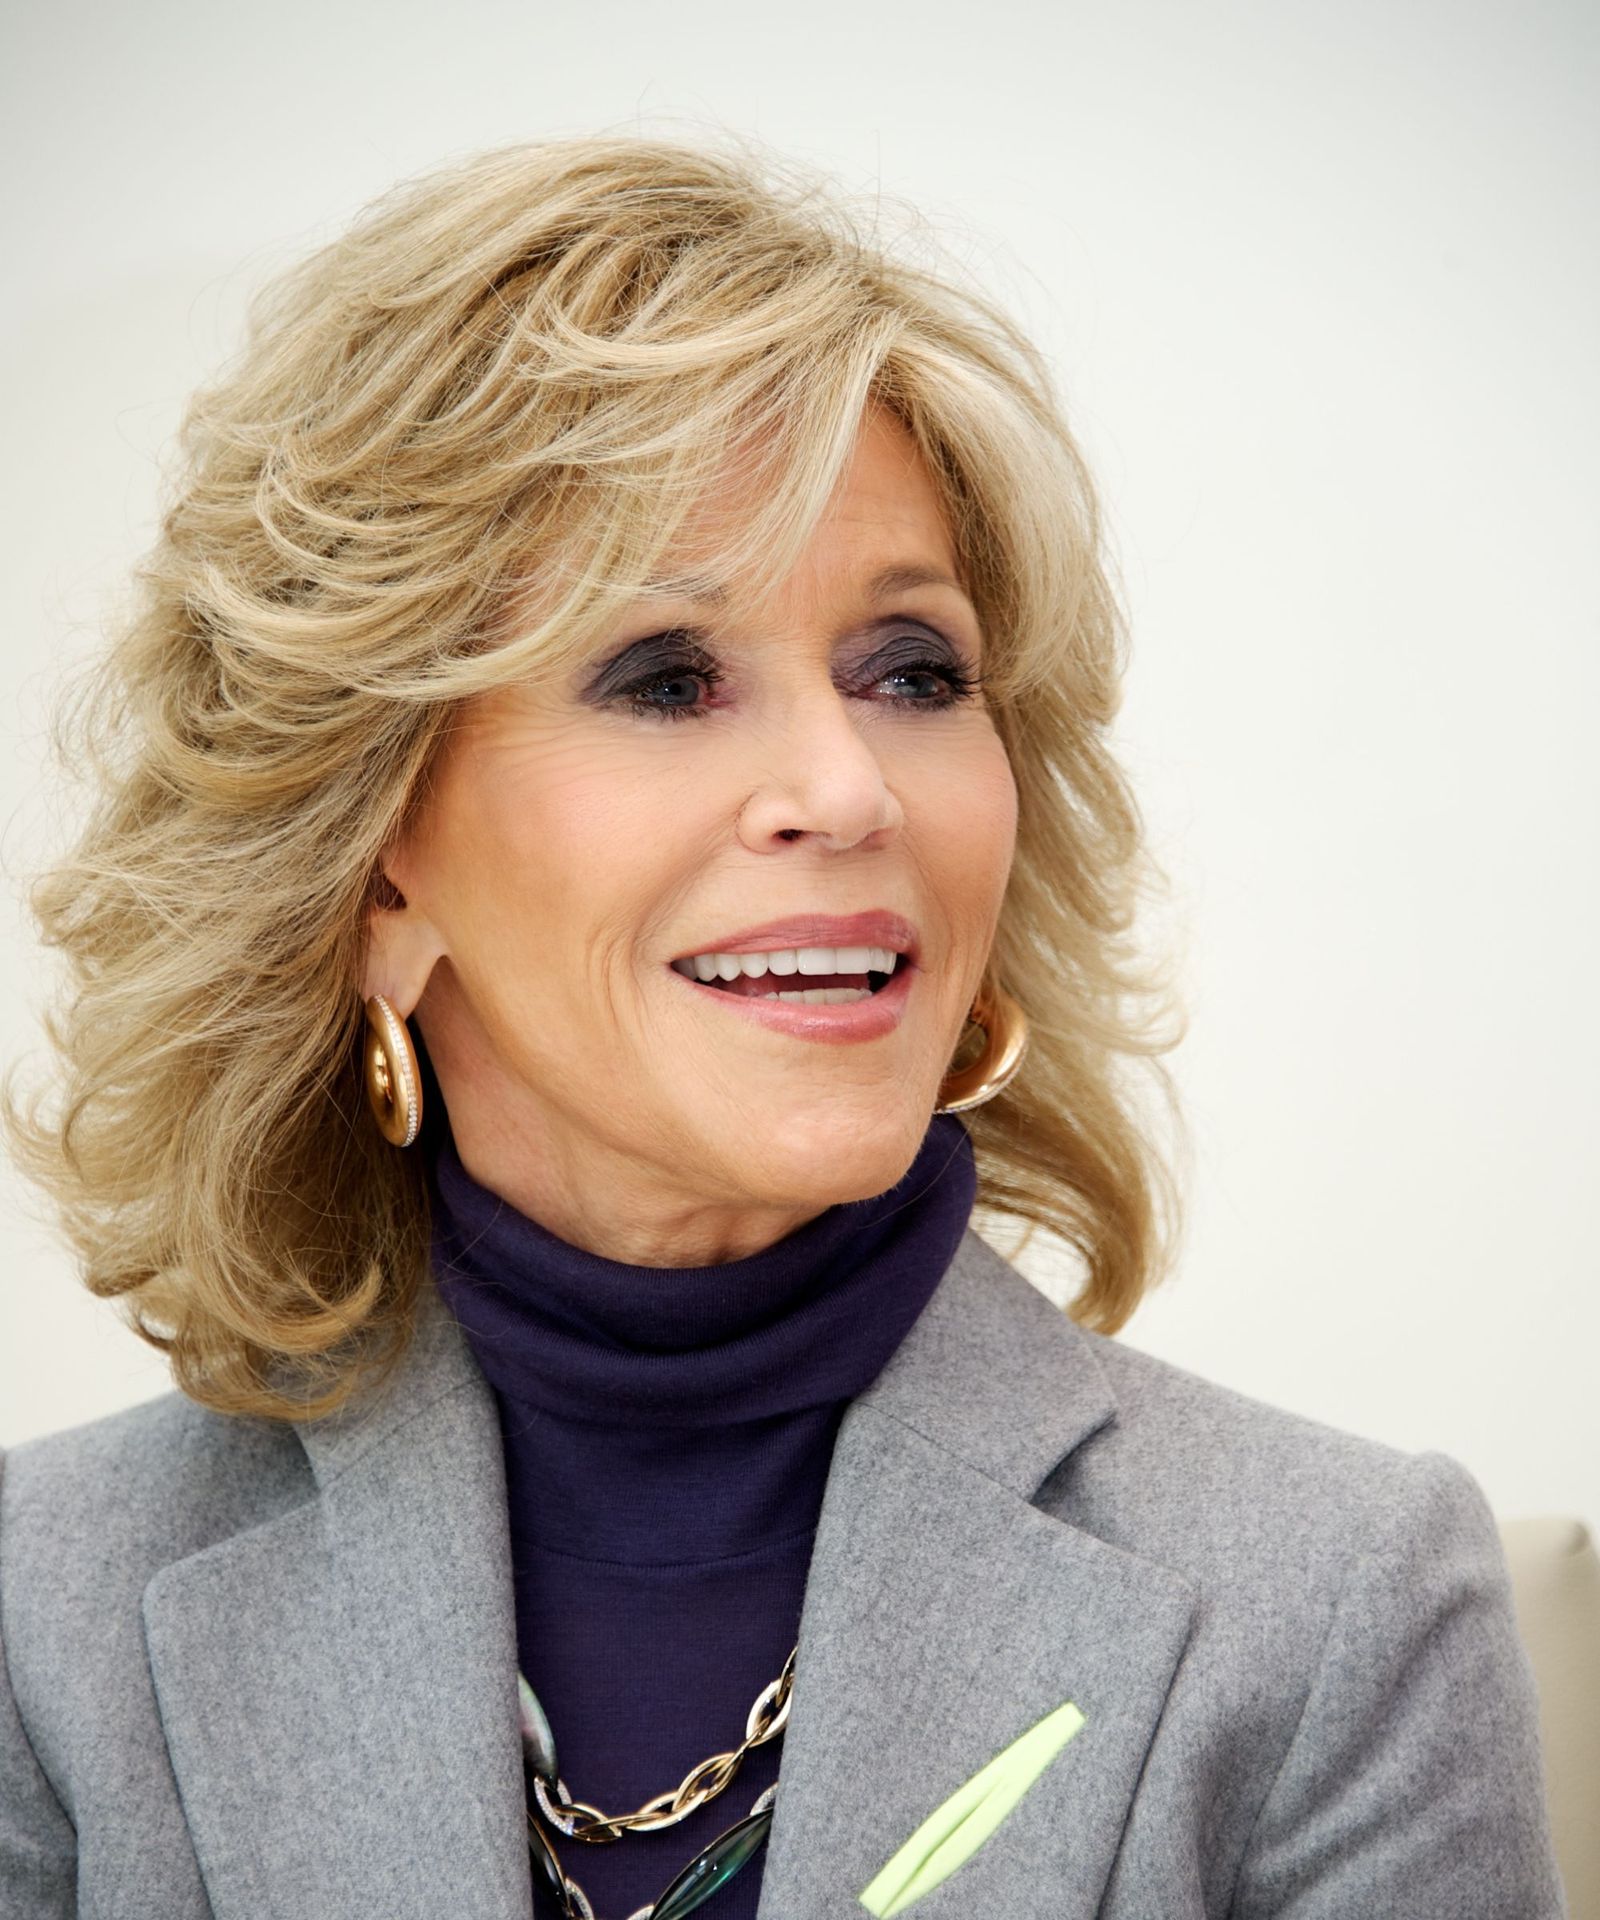 Jane Fonda's landing is on trend for two key reasons | Homes & Gardens